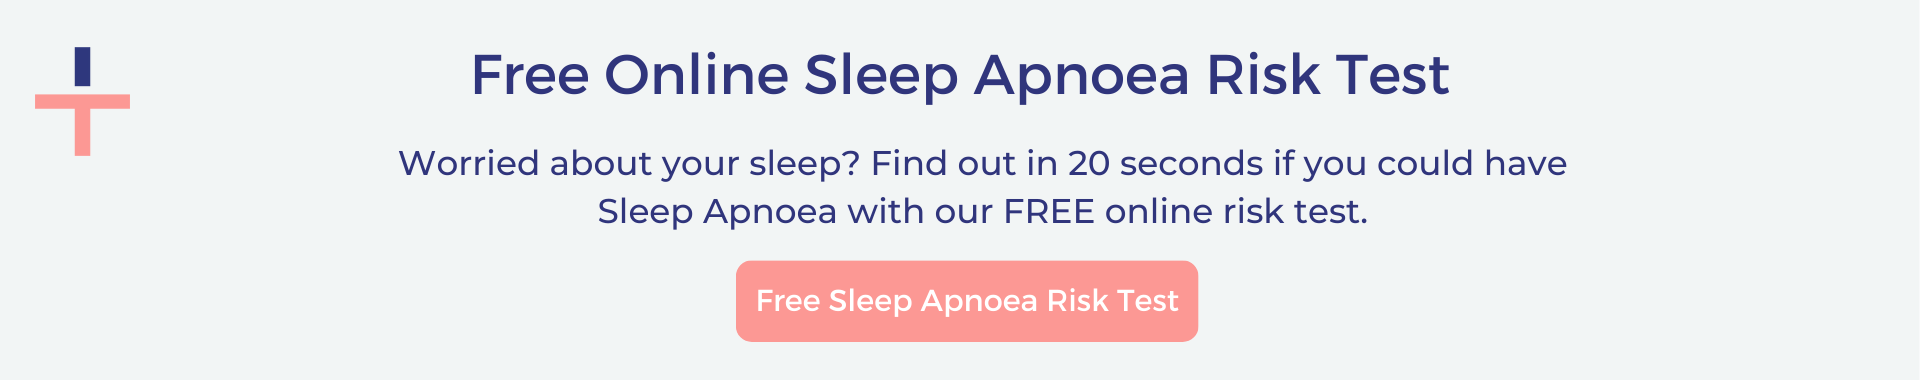 FREE Online Sleep Apnoea Risk Test Blue | Intus Healthcare